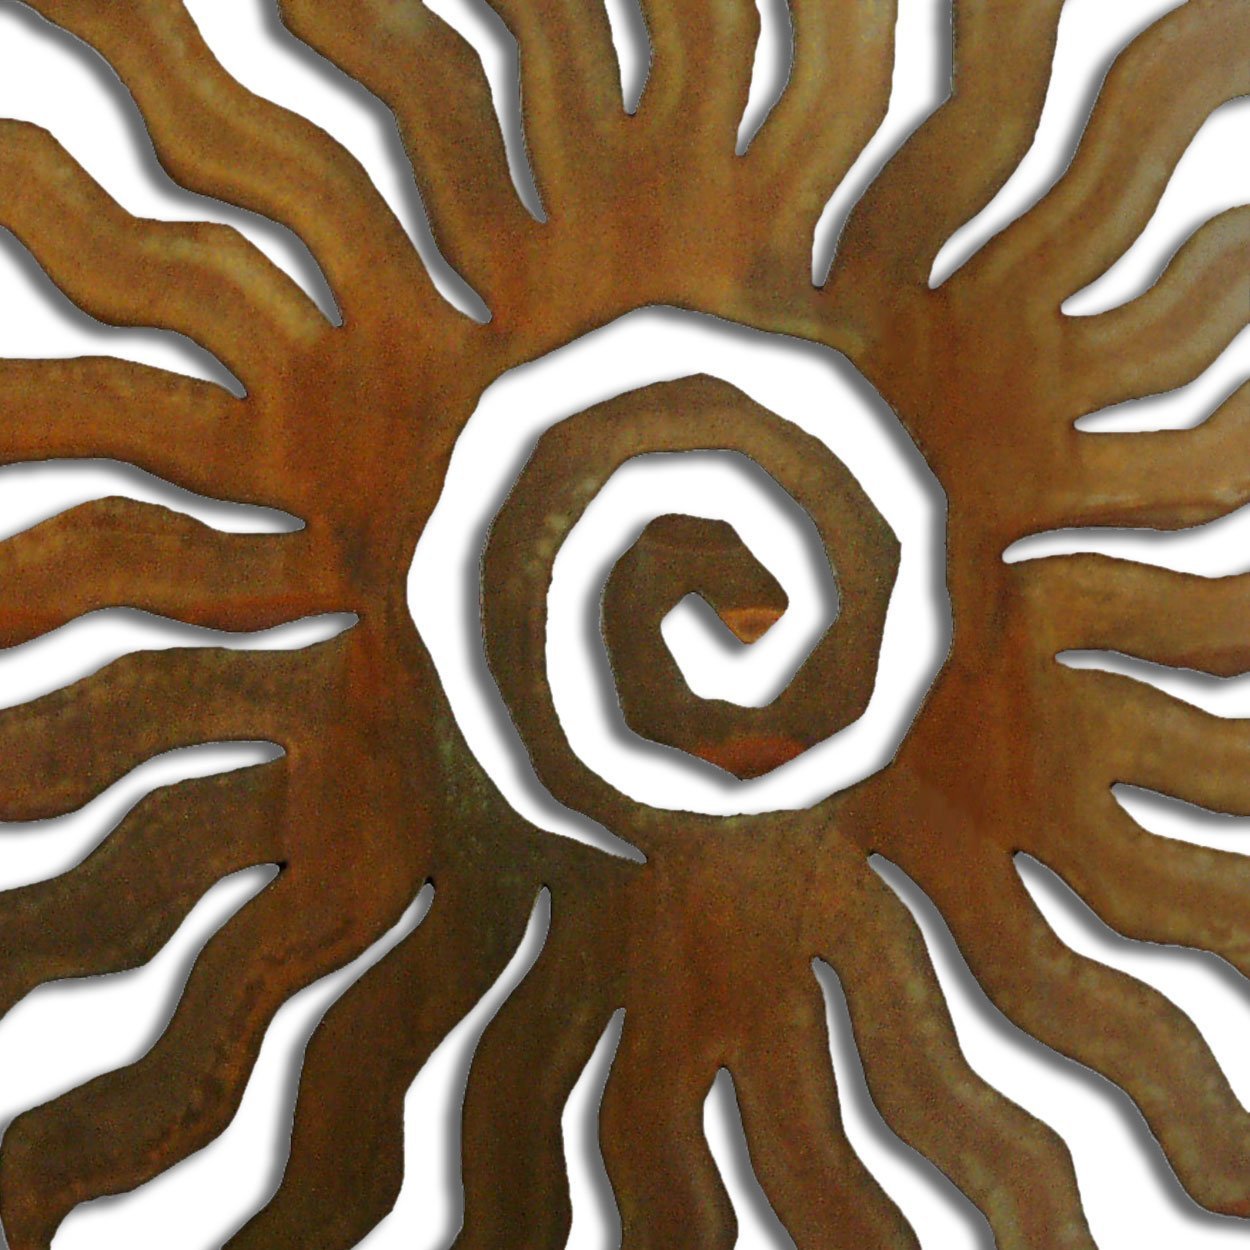 165161 - 12-inch small 24-Ray Sunburst 3D Metal Wall Art in a rich rust finish